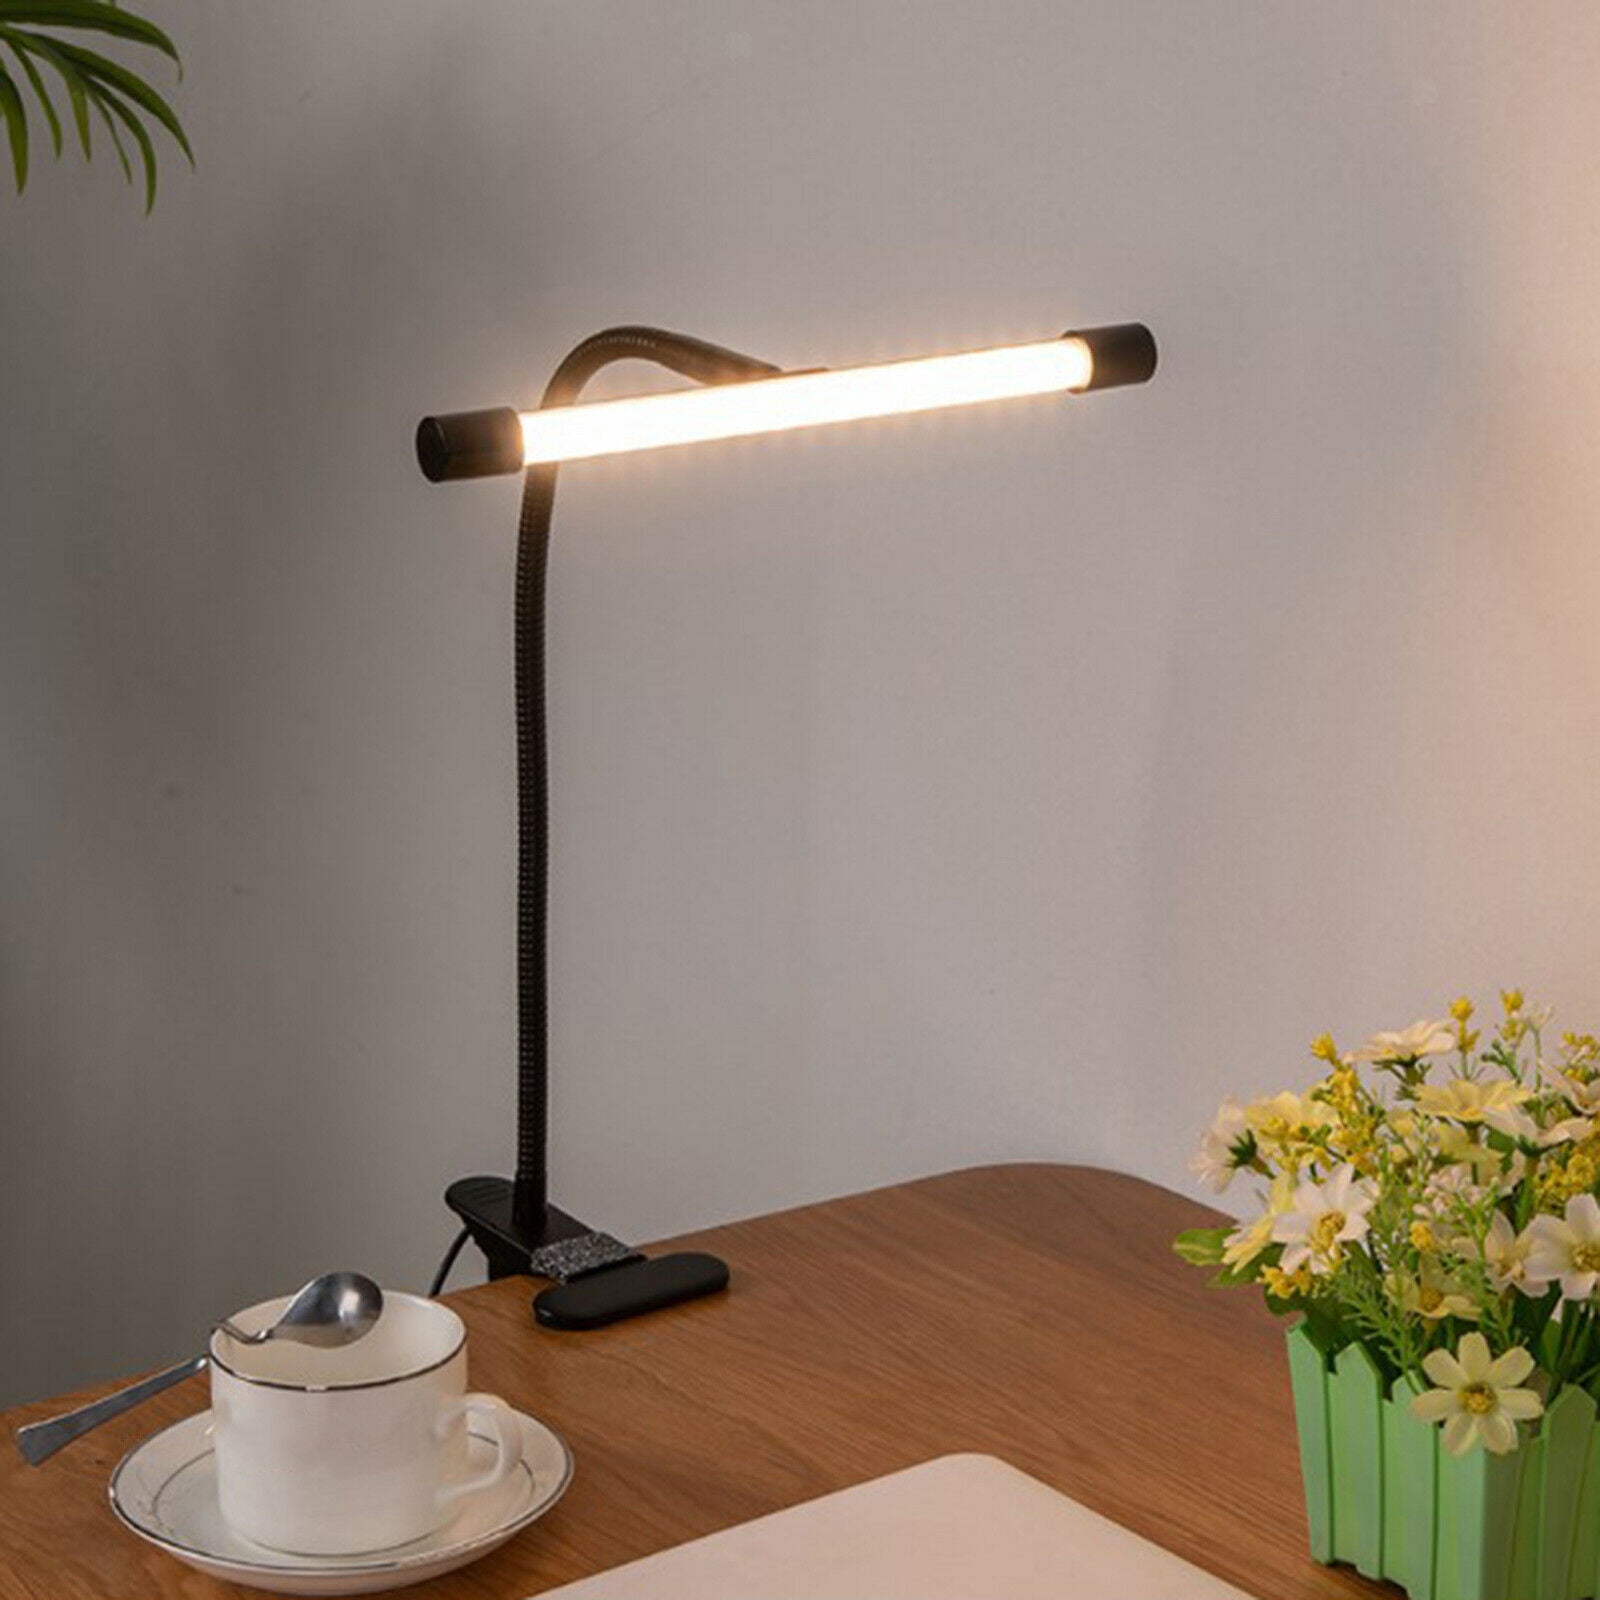 Portable Clip On LED Desk Lamp Flexible Arm Study Eye-Caring Bedroom Art